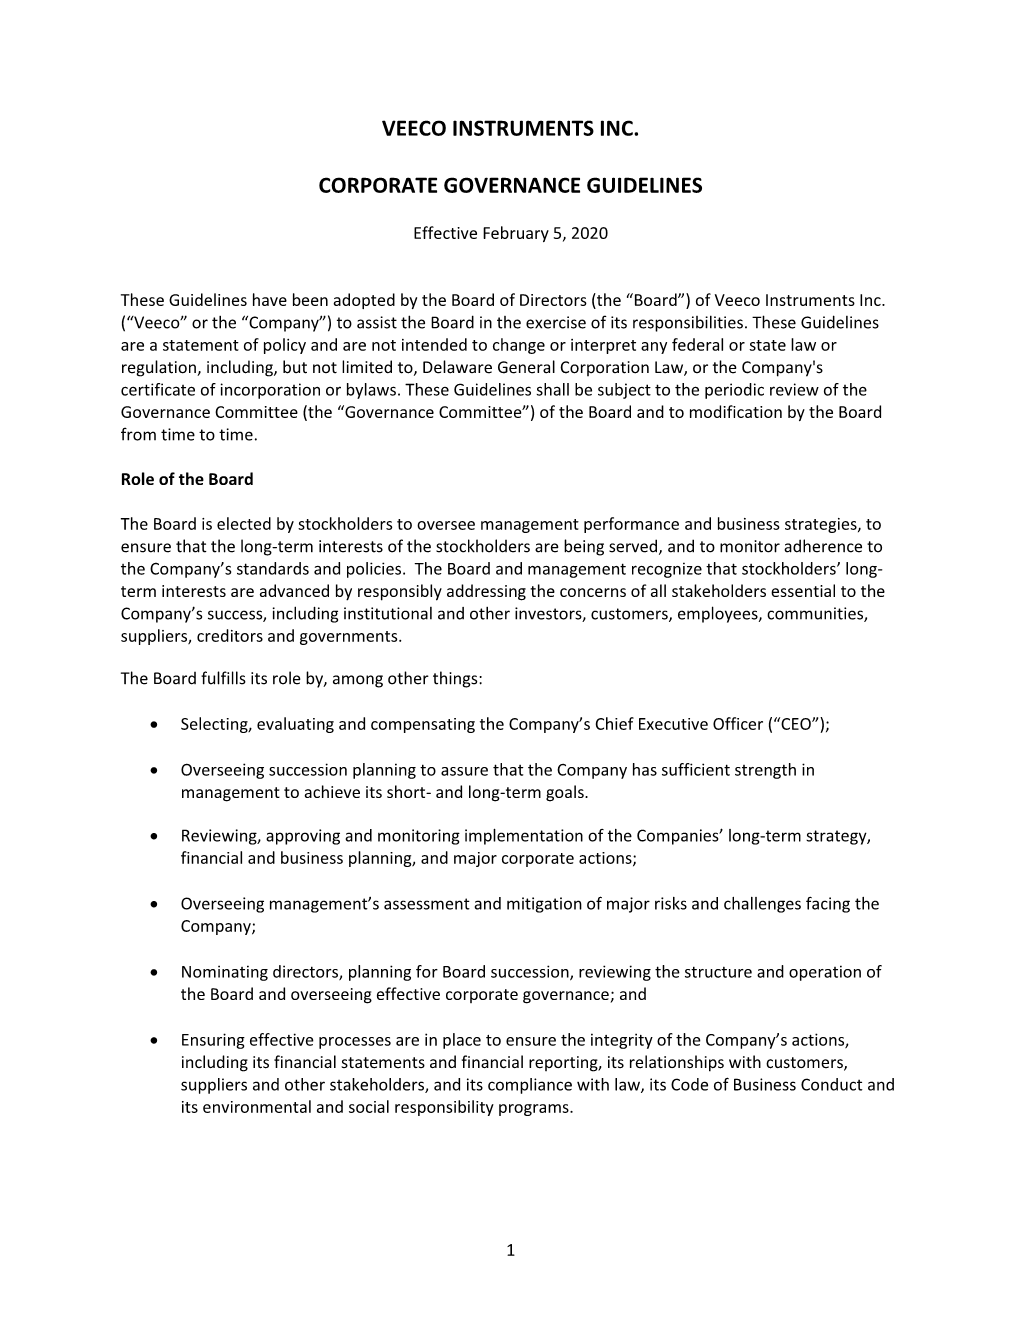 Veeco Instruments Inc. Corporate Governance